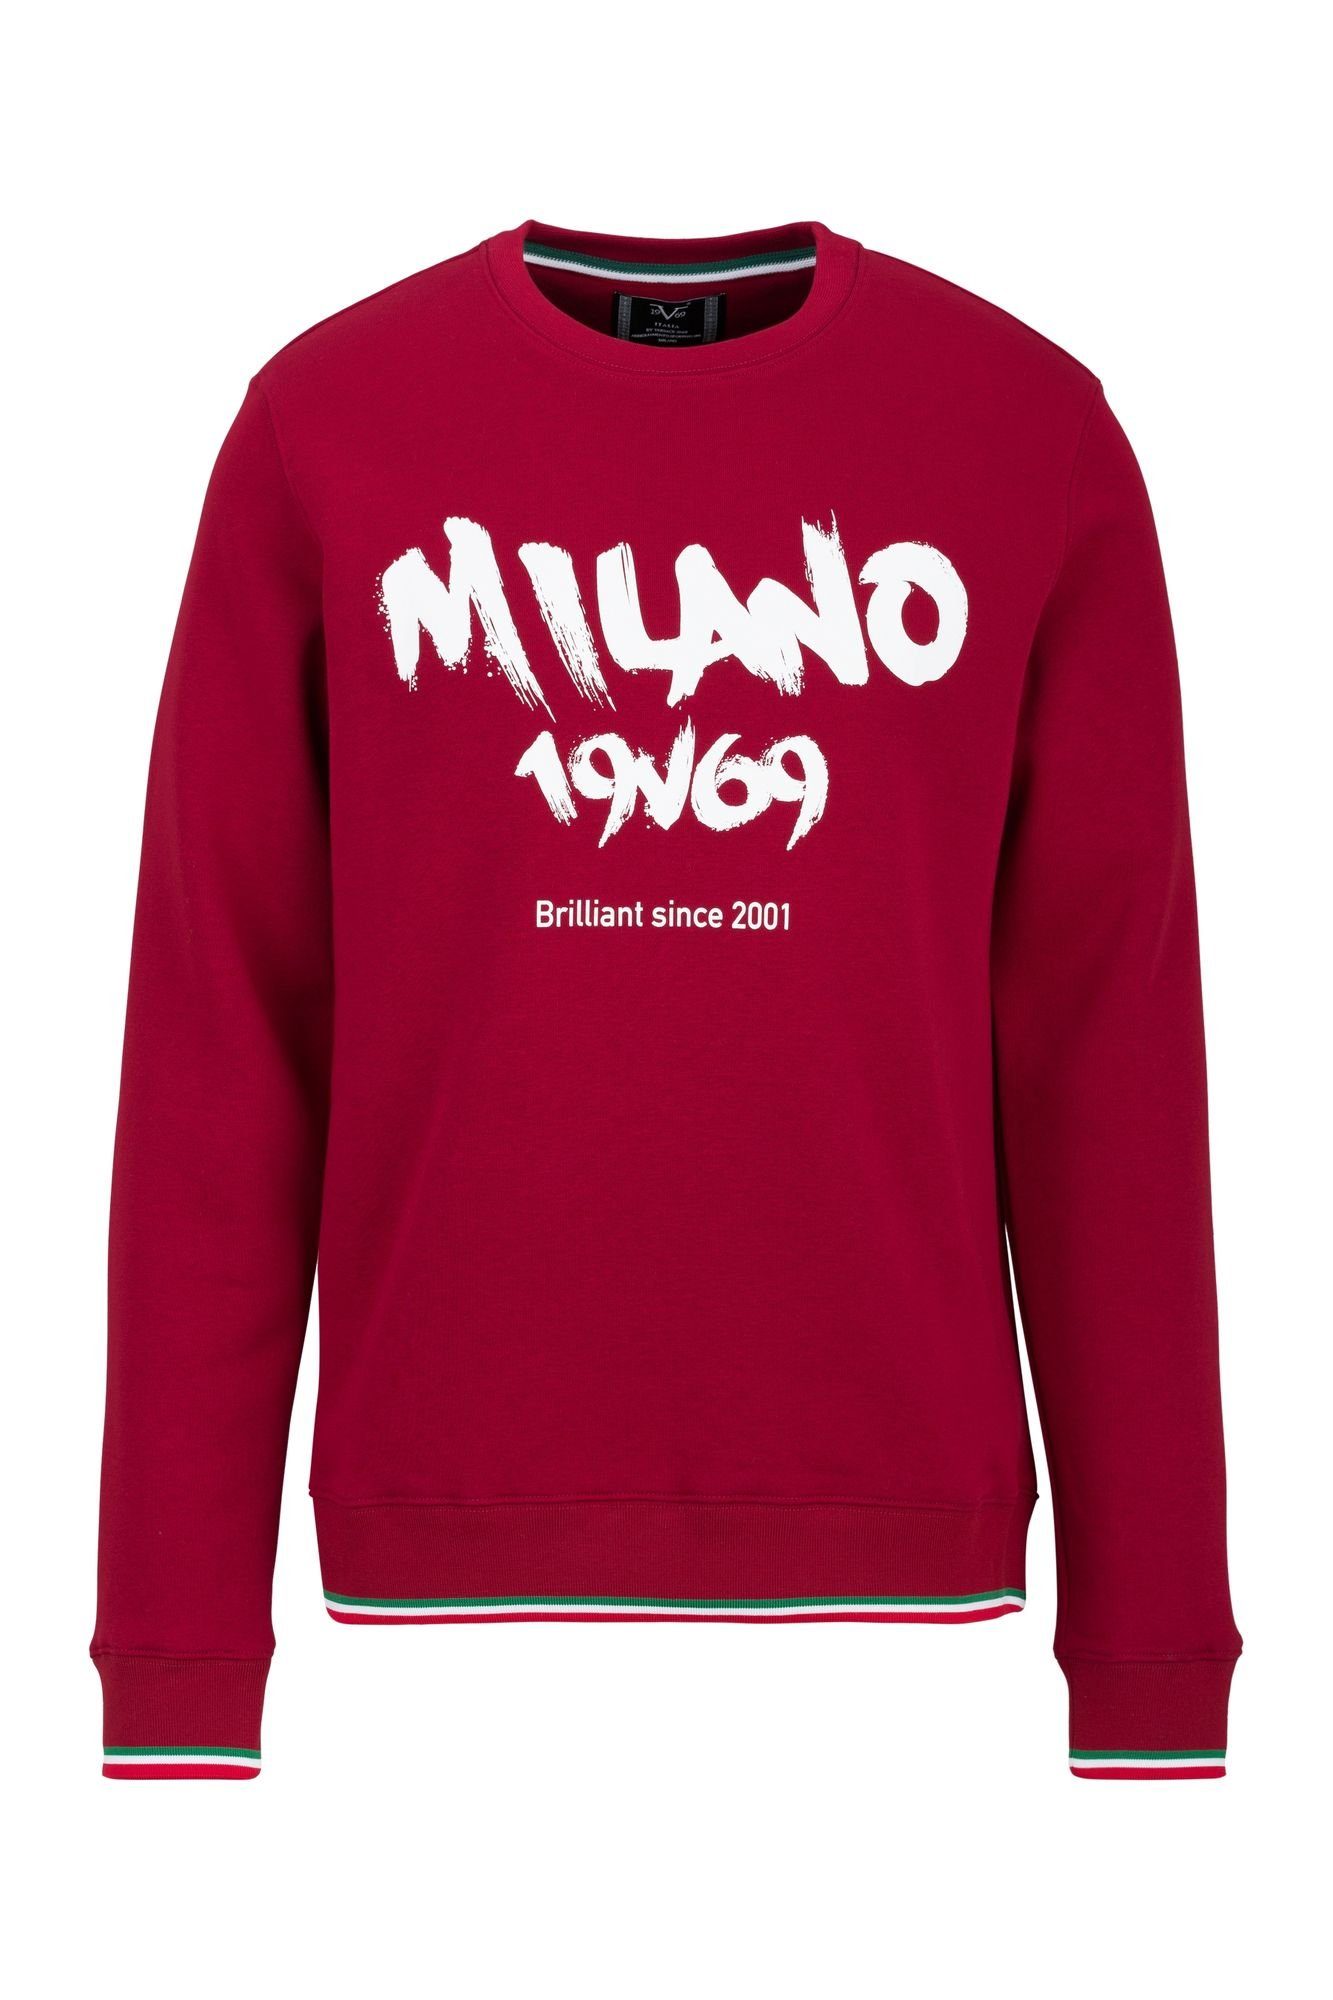 19V69 Italia by Versace Sweatshirt by Versace Sportivo SRL - Ernesto